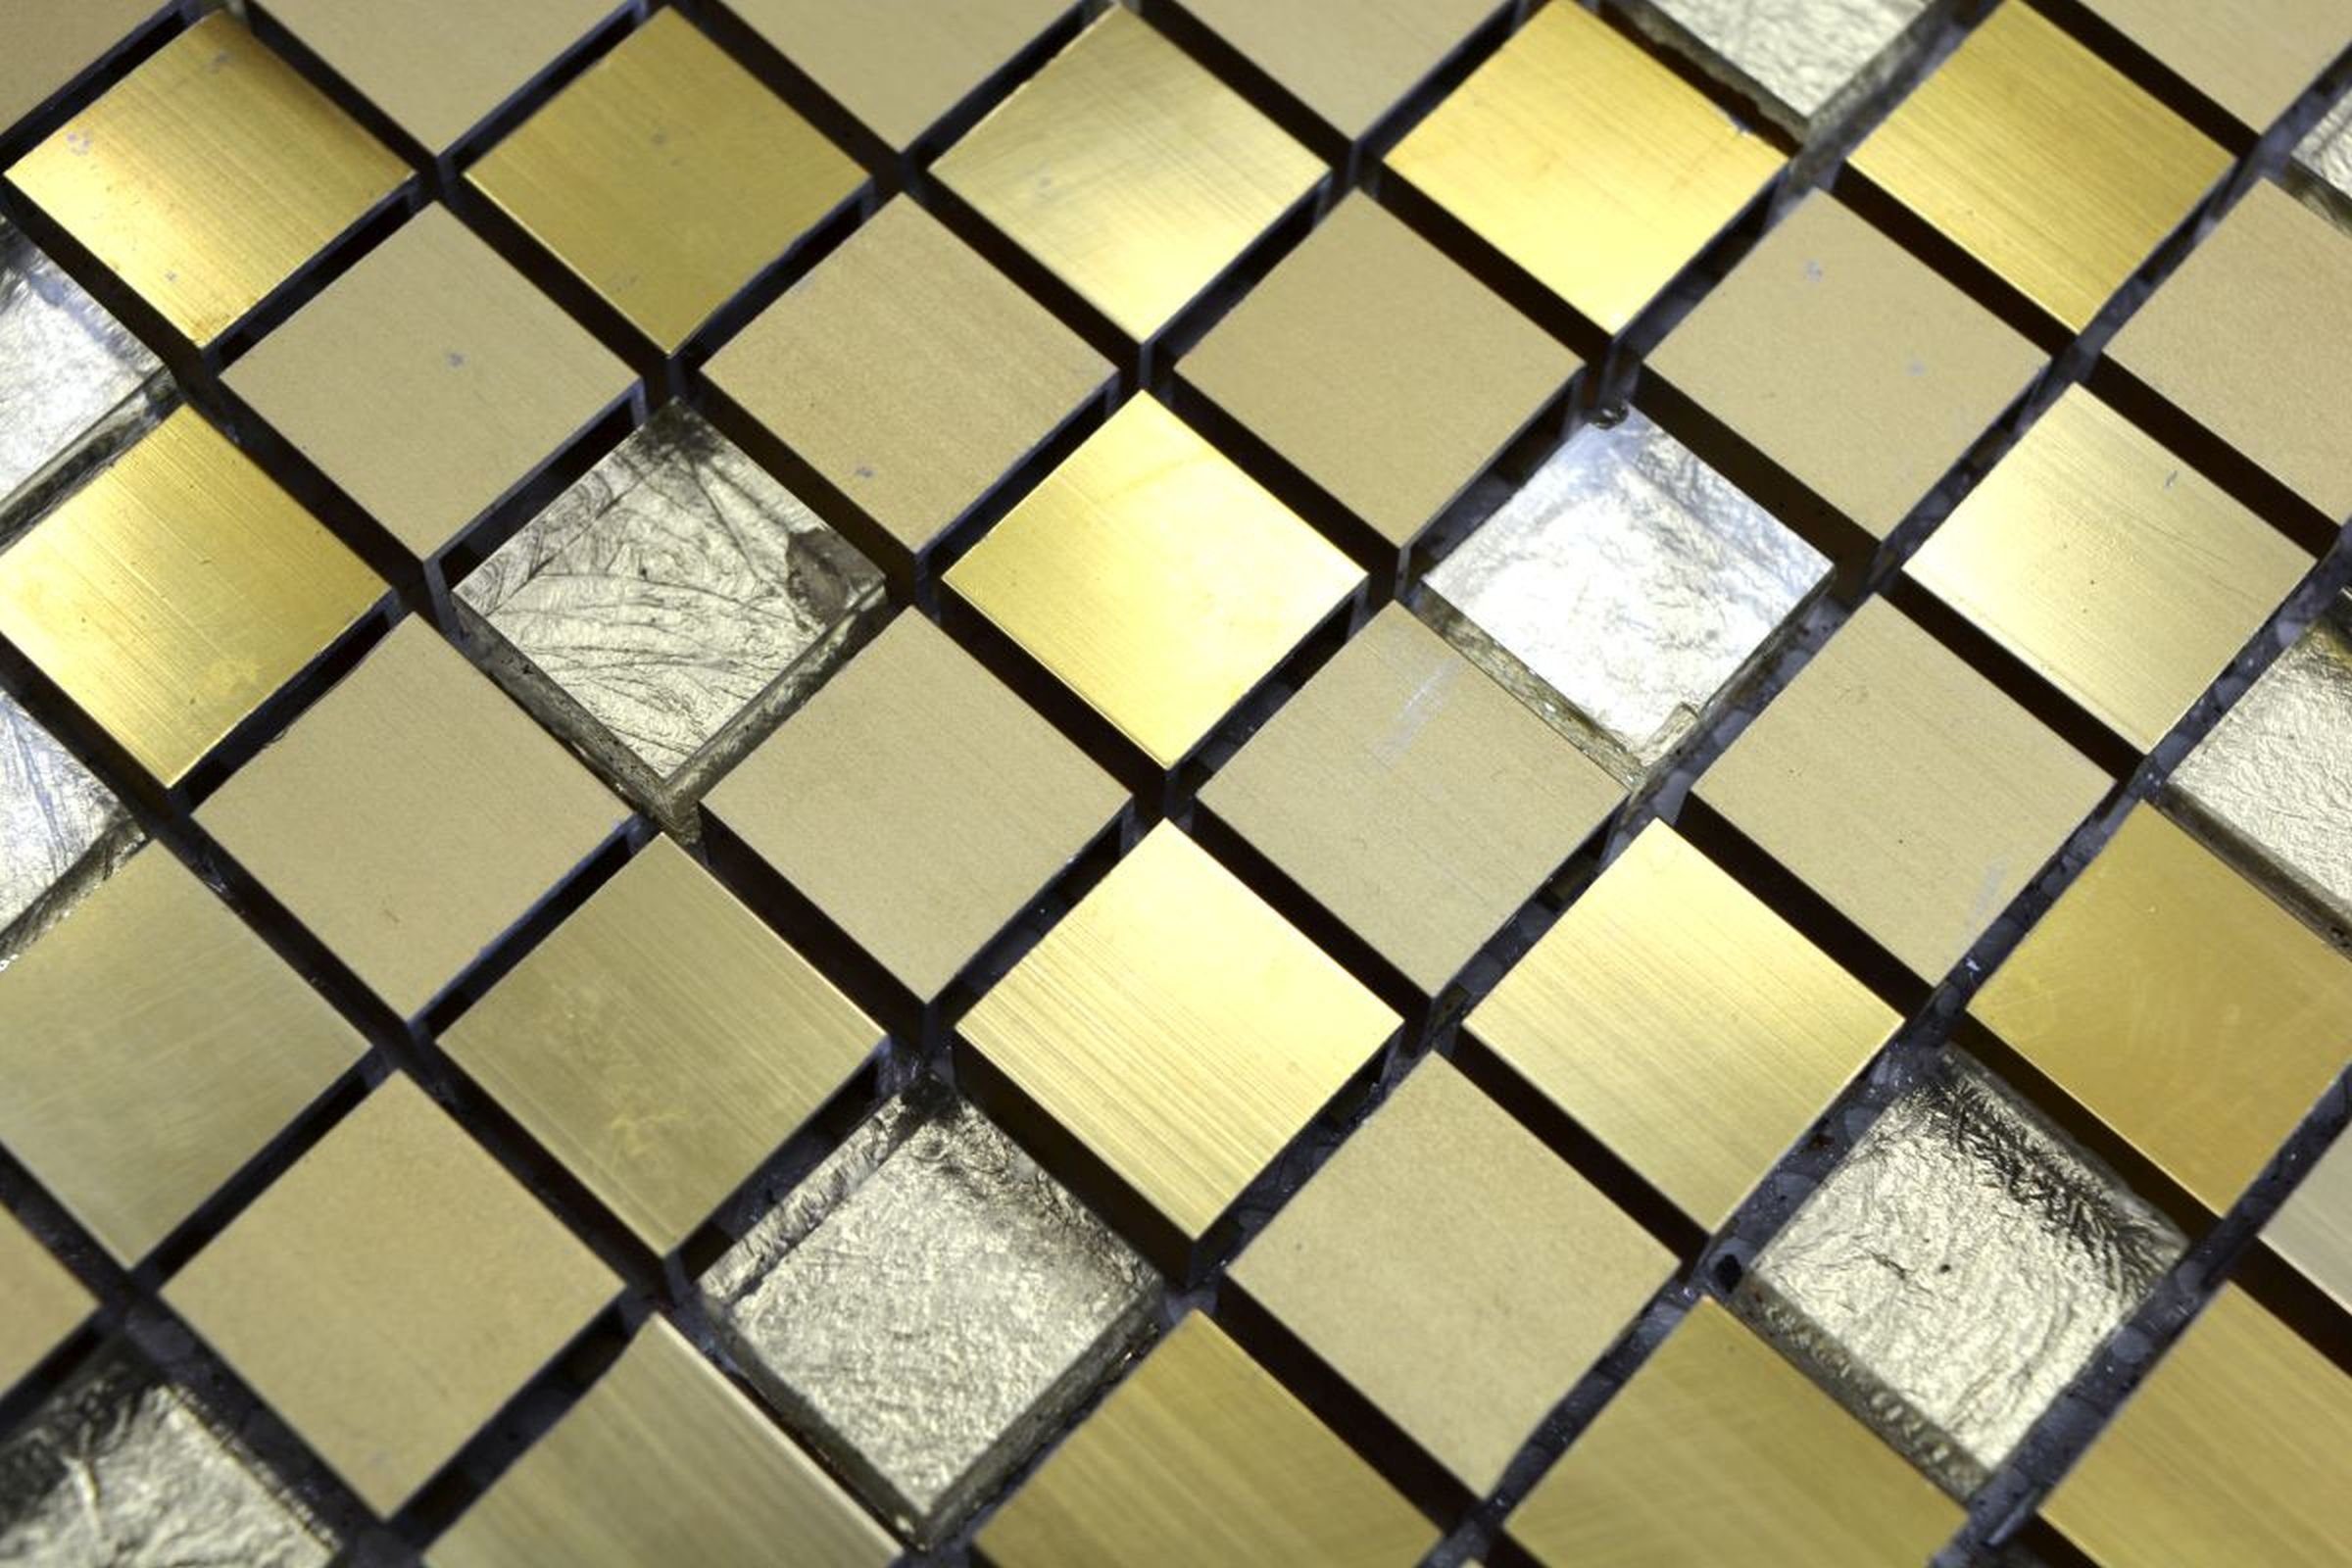 Mosani Mosaikfliesen Mosaik Glasmosaik Aluminium Küchenrückwand gold Fliese